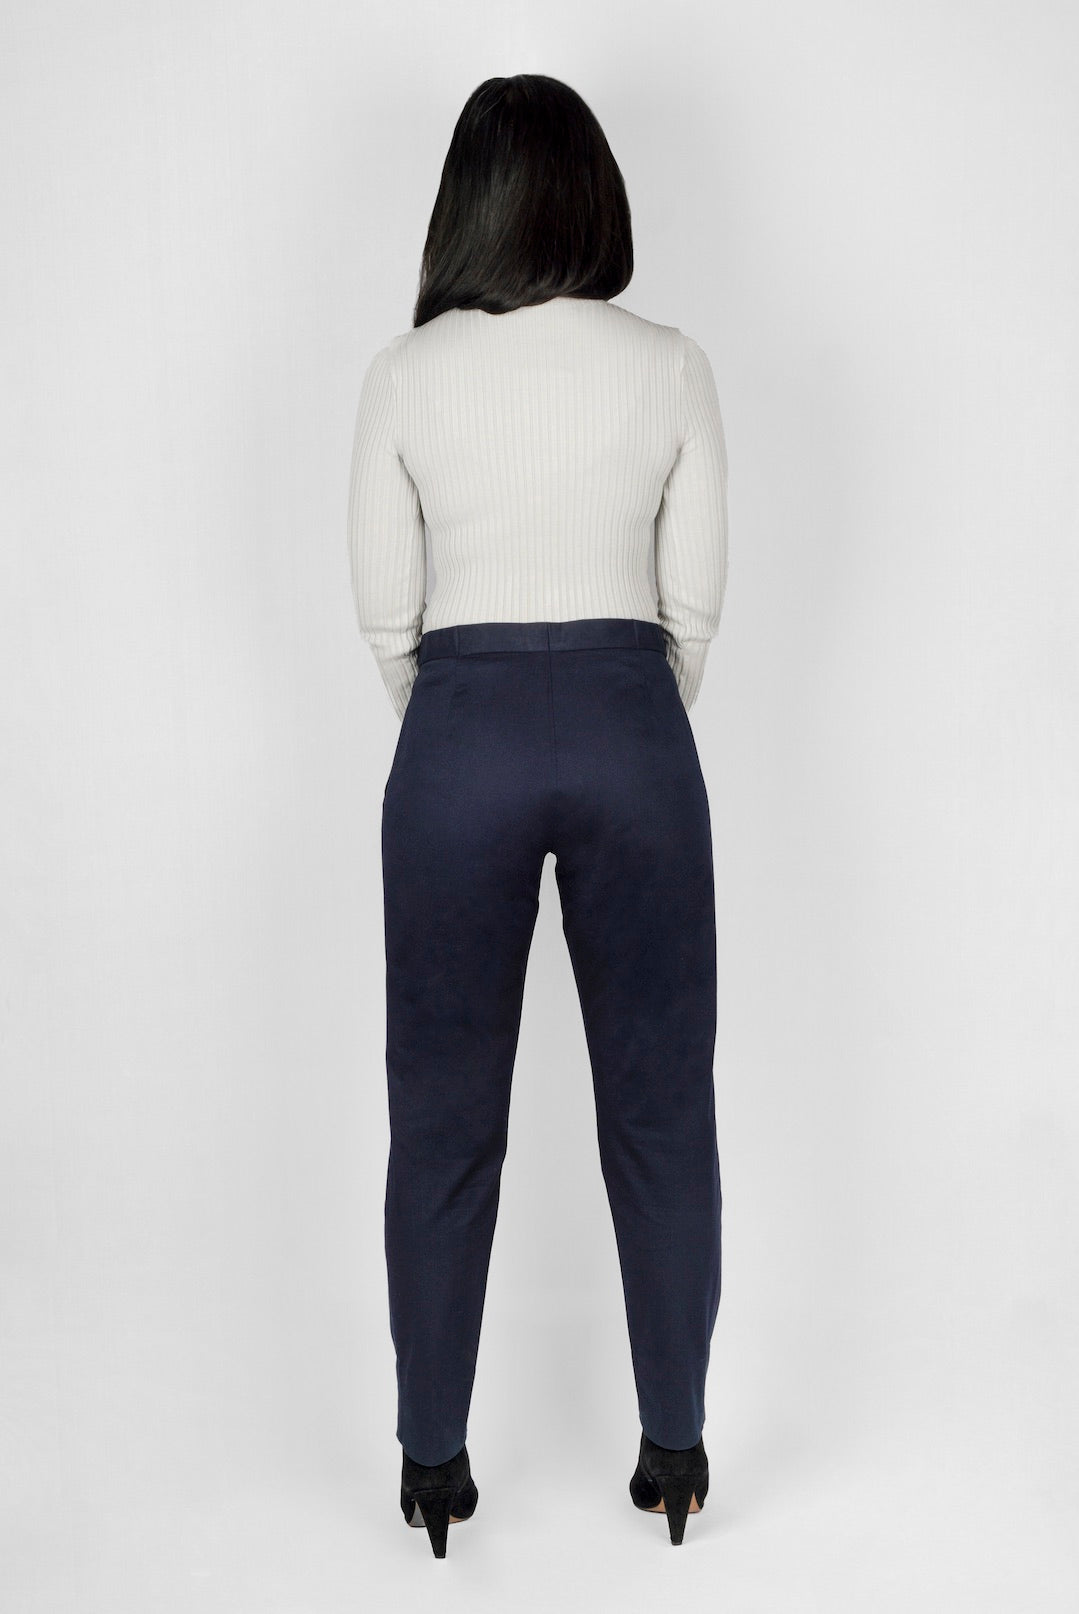 Buy FRANKO ROGER Men Slim Fit Flexi Cotton Blend Trousers (34, White) at  Amazon.in